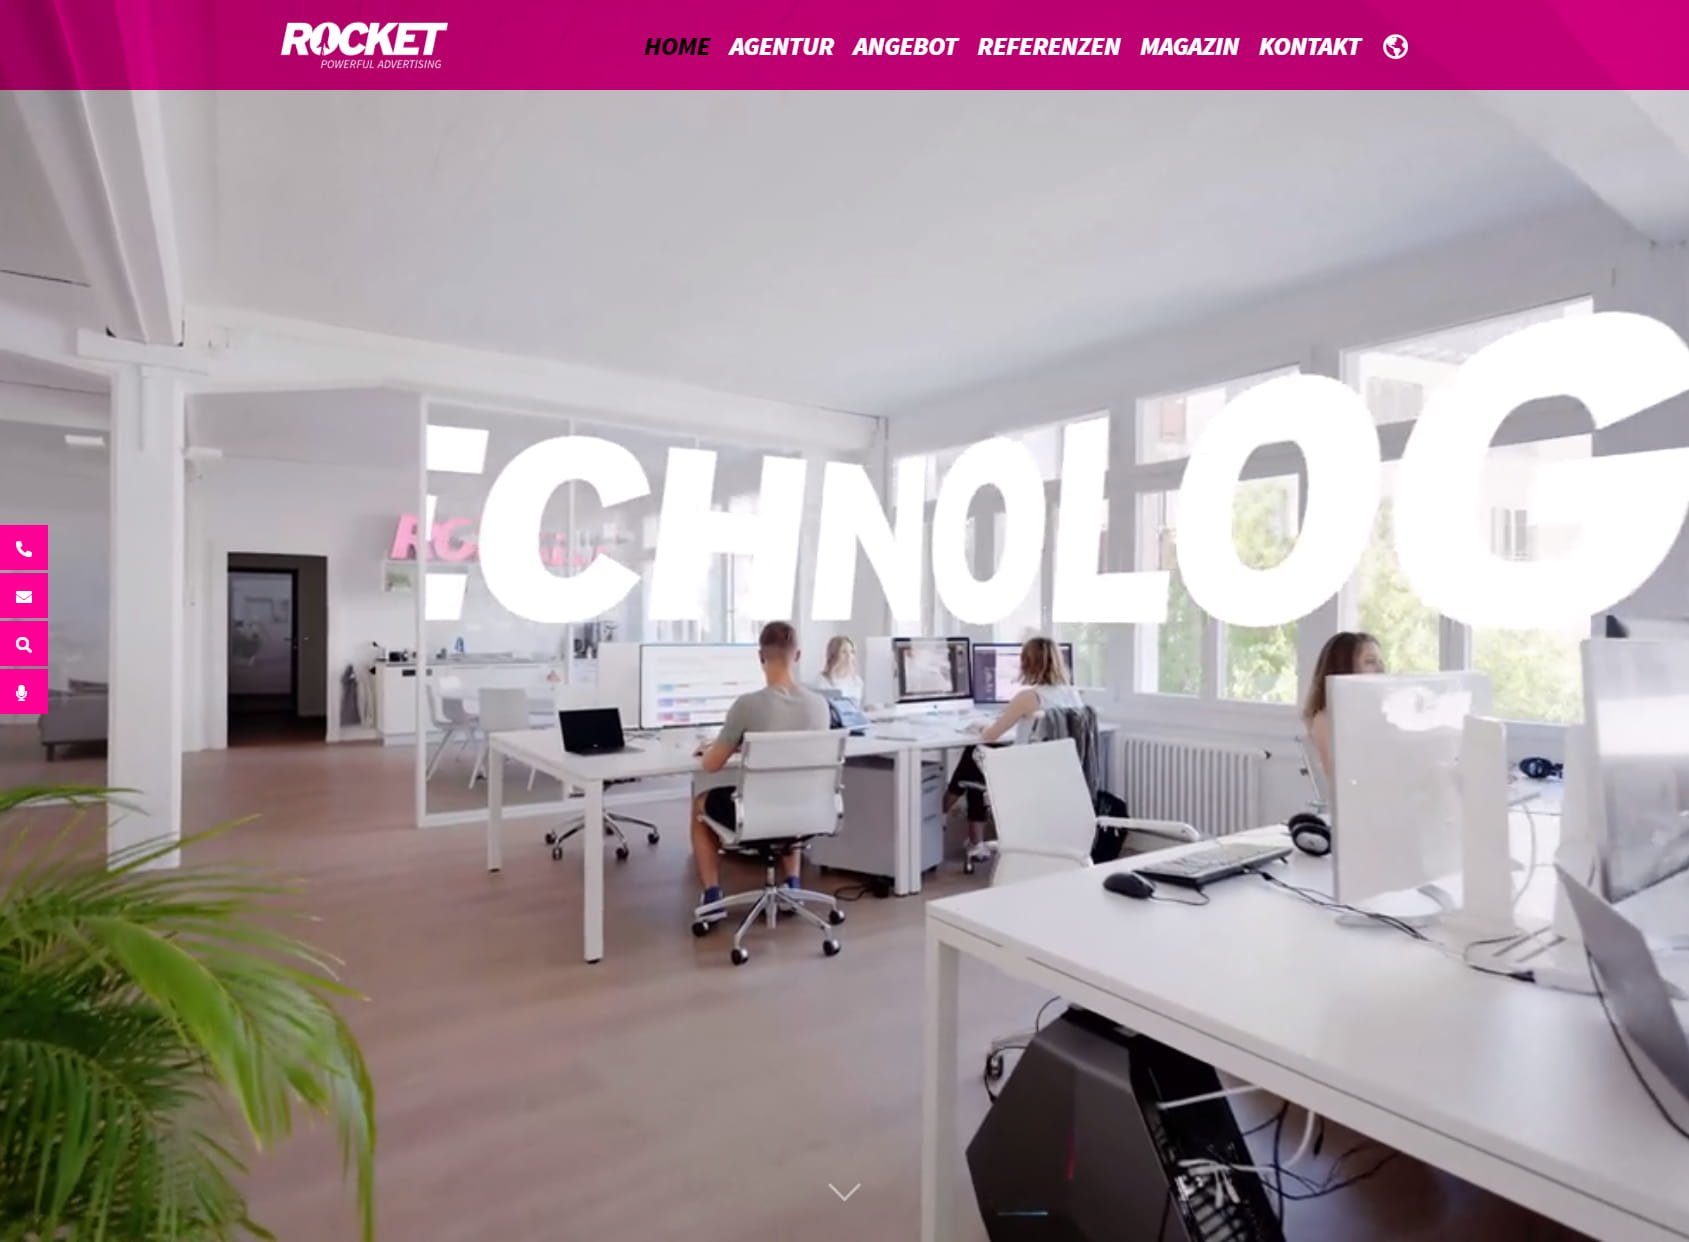 Rocket GmbH